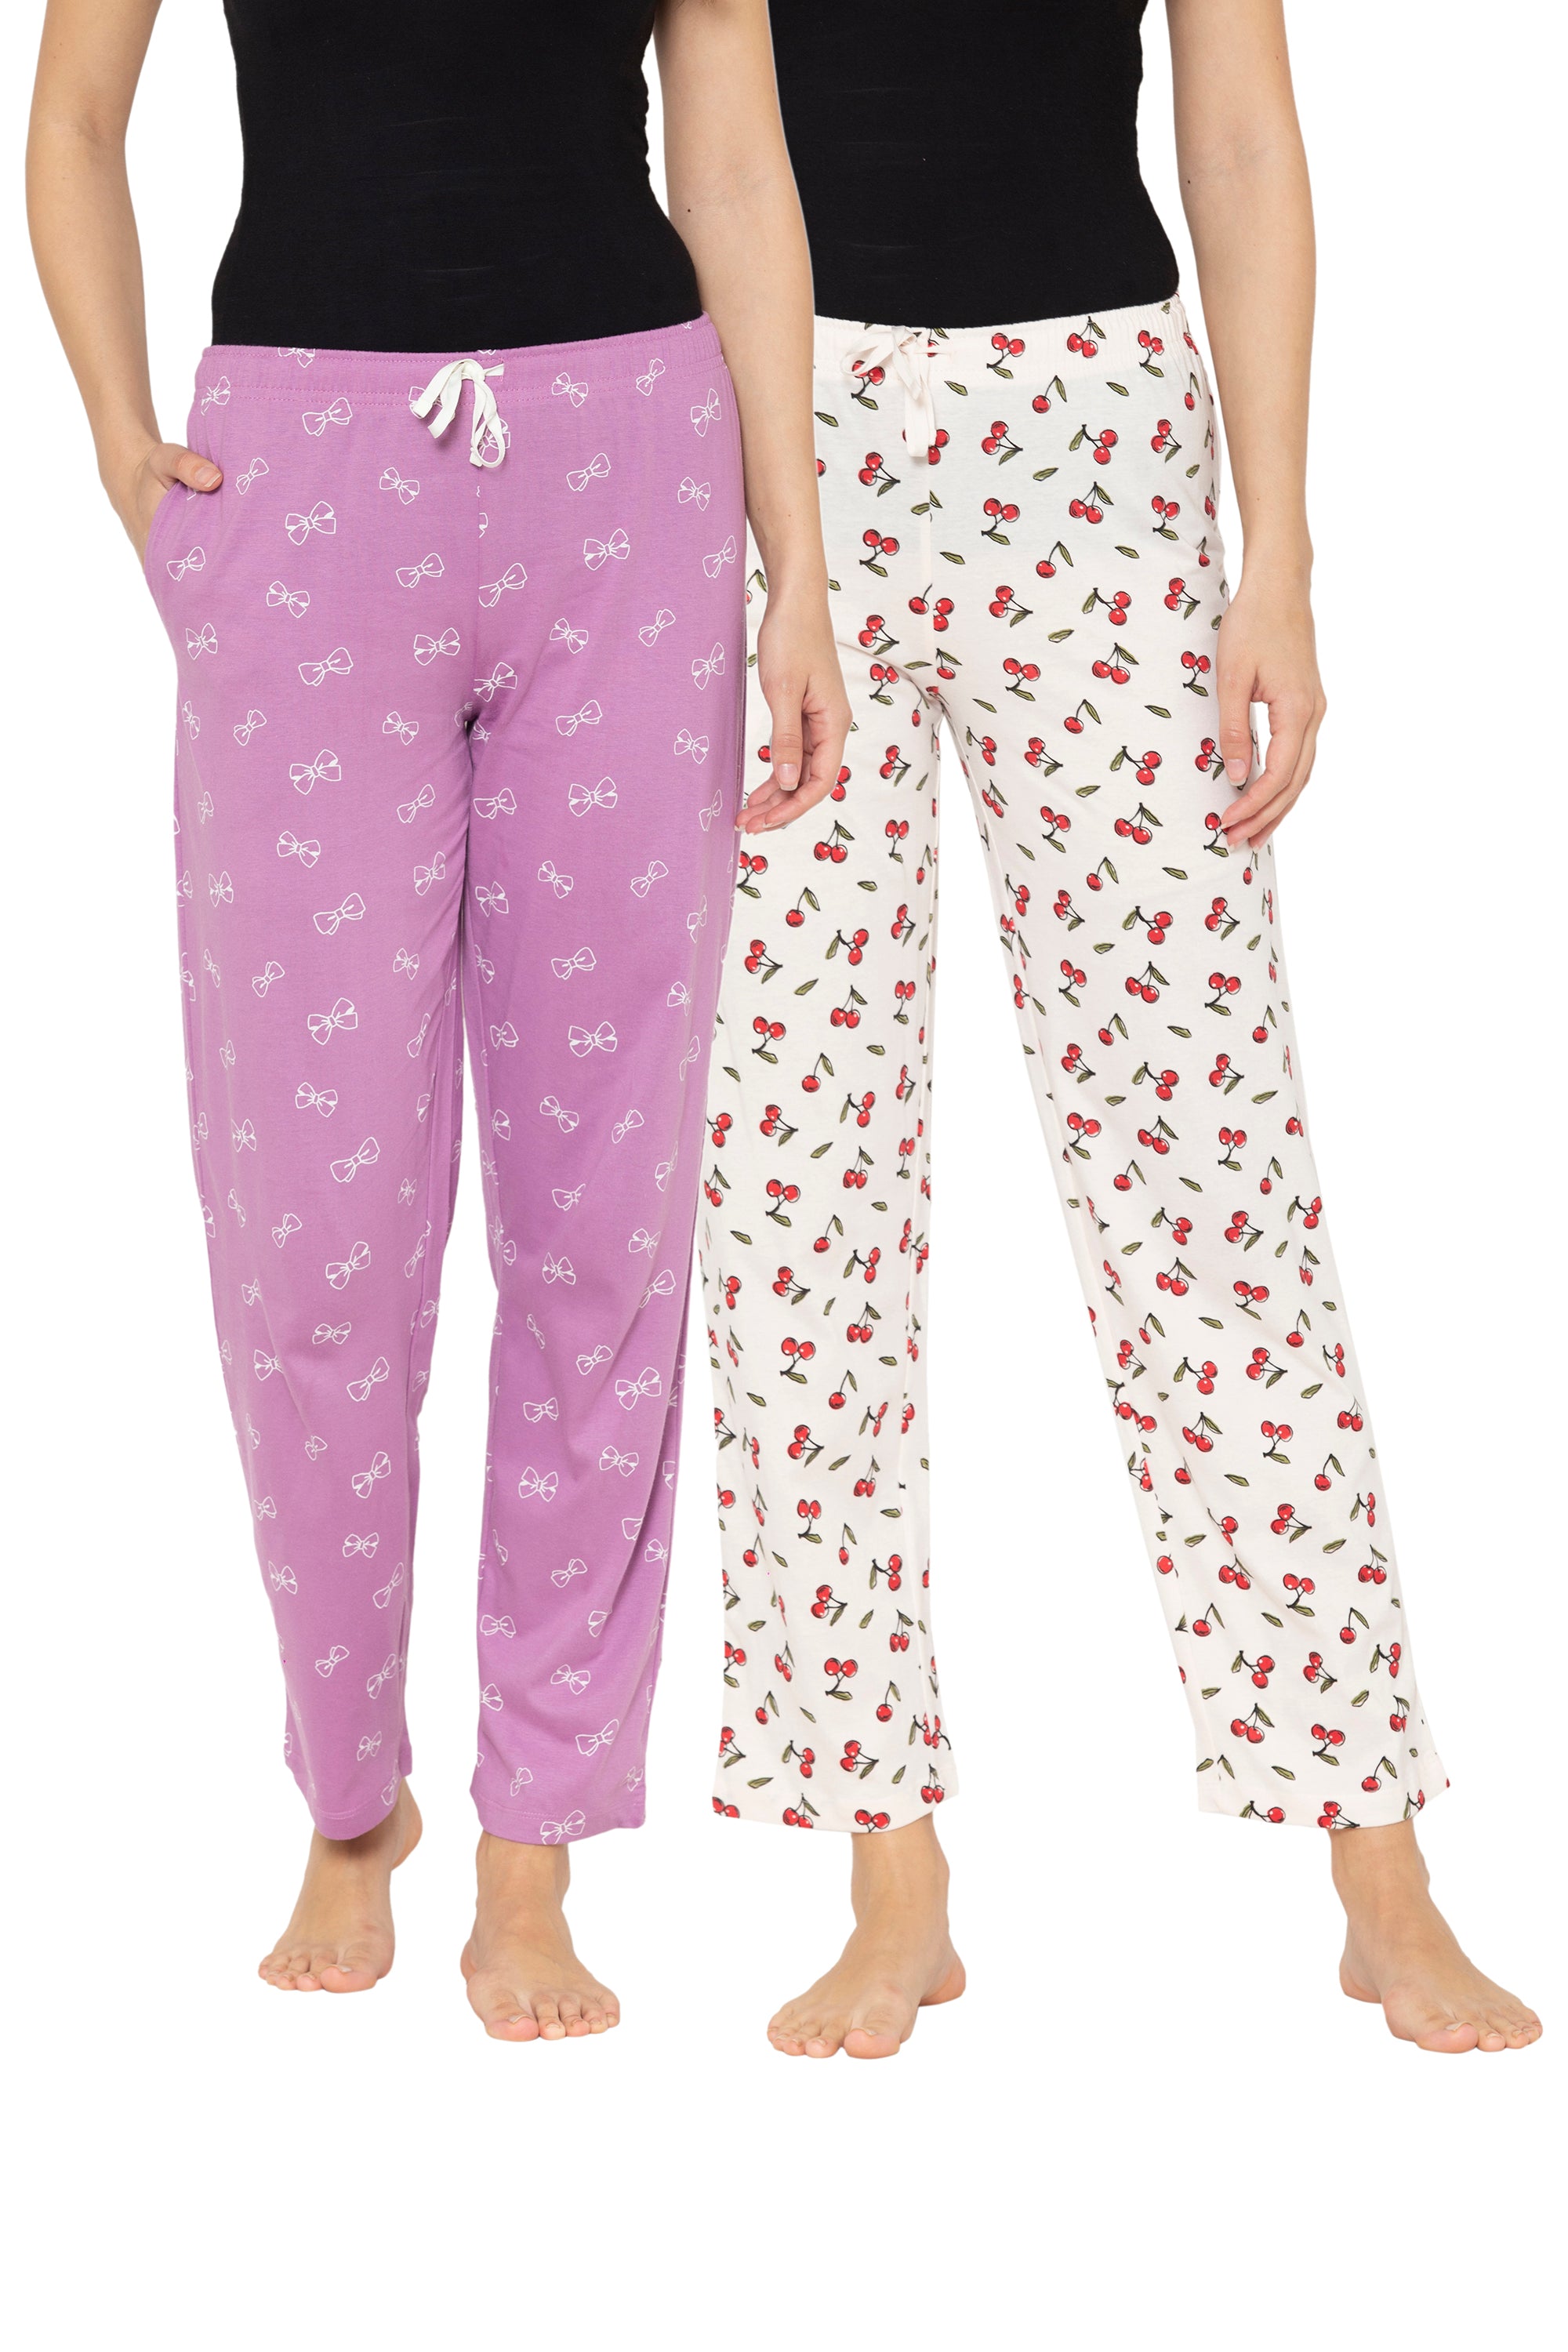 Vislivin Women's Stretch Knit Pajama Pants Modal Sleep Pant Black Thin S at  Amazon Women's Clothing store